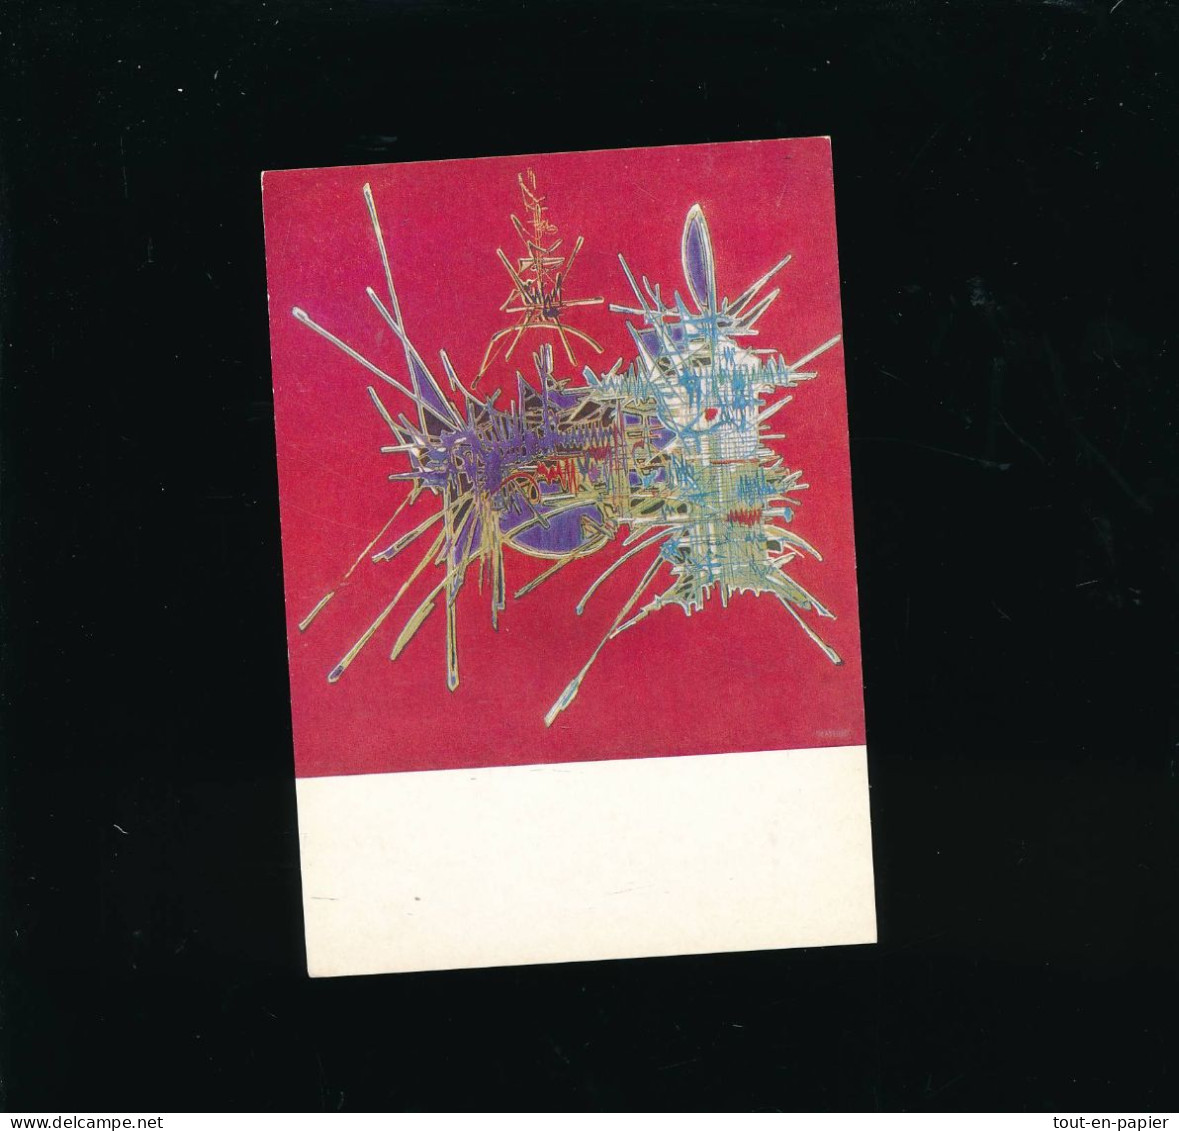 CPSM Art Peinture - MATHIEU Georges Ed Braun N°590 - Hommage à Nicolas Fouquet 1967 - Malerei & Gemälde